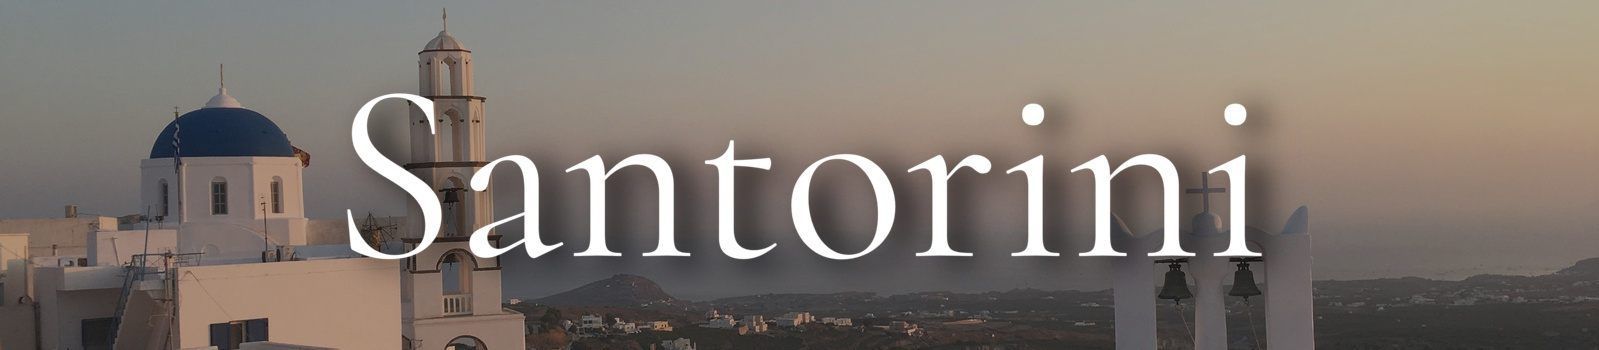 Santorini Banner